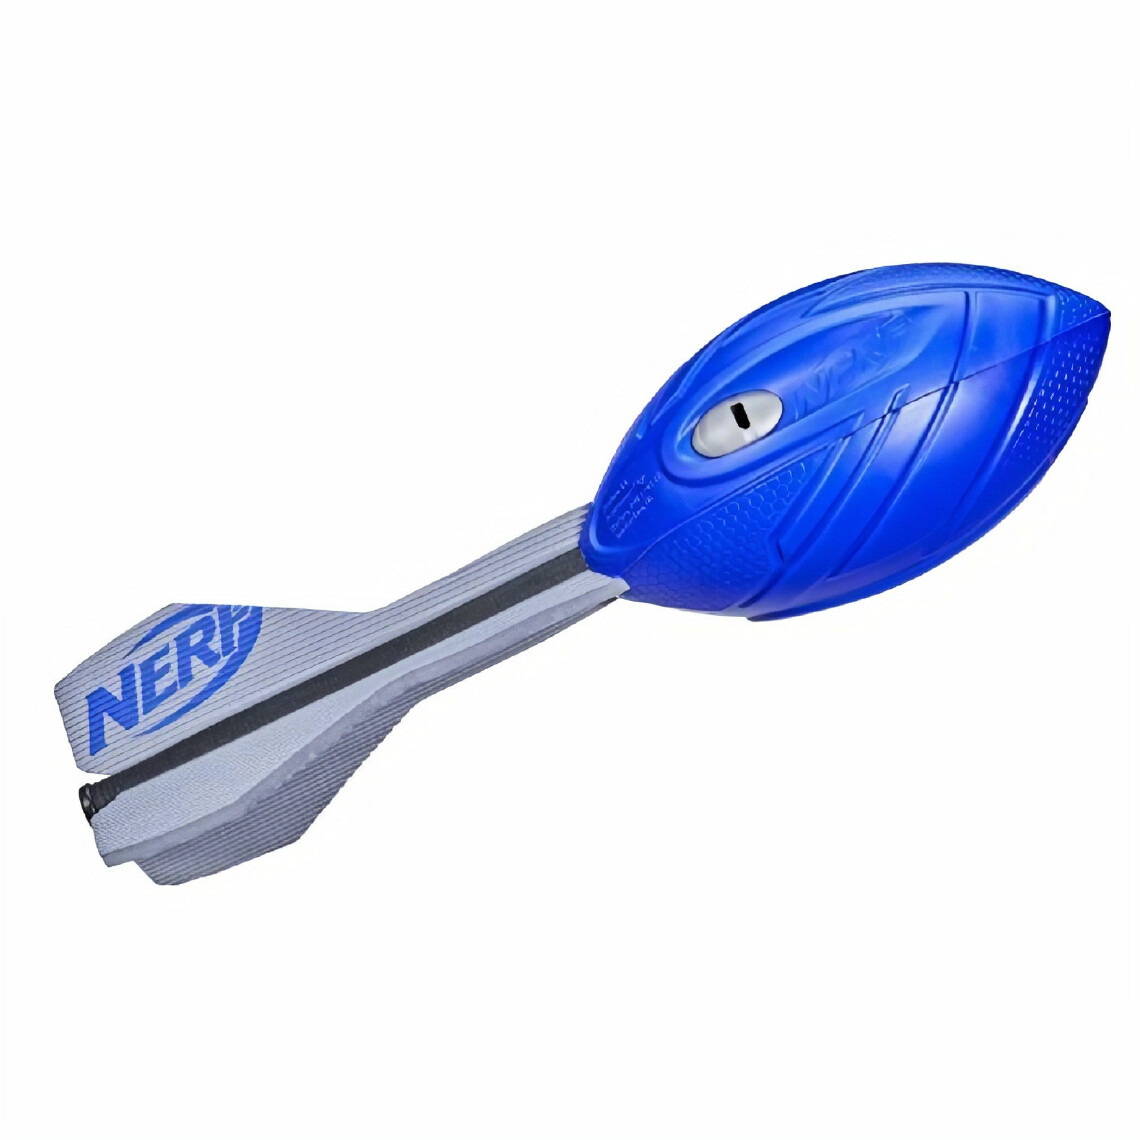 Nerf - Nerf Sports - Vortex Howler Football Bleu - Jeux de récréation